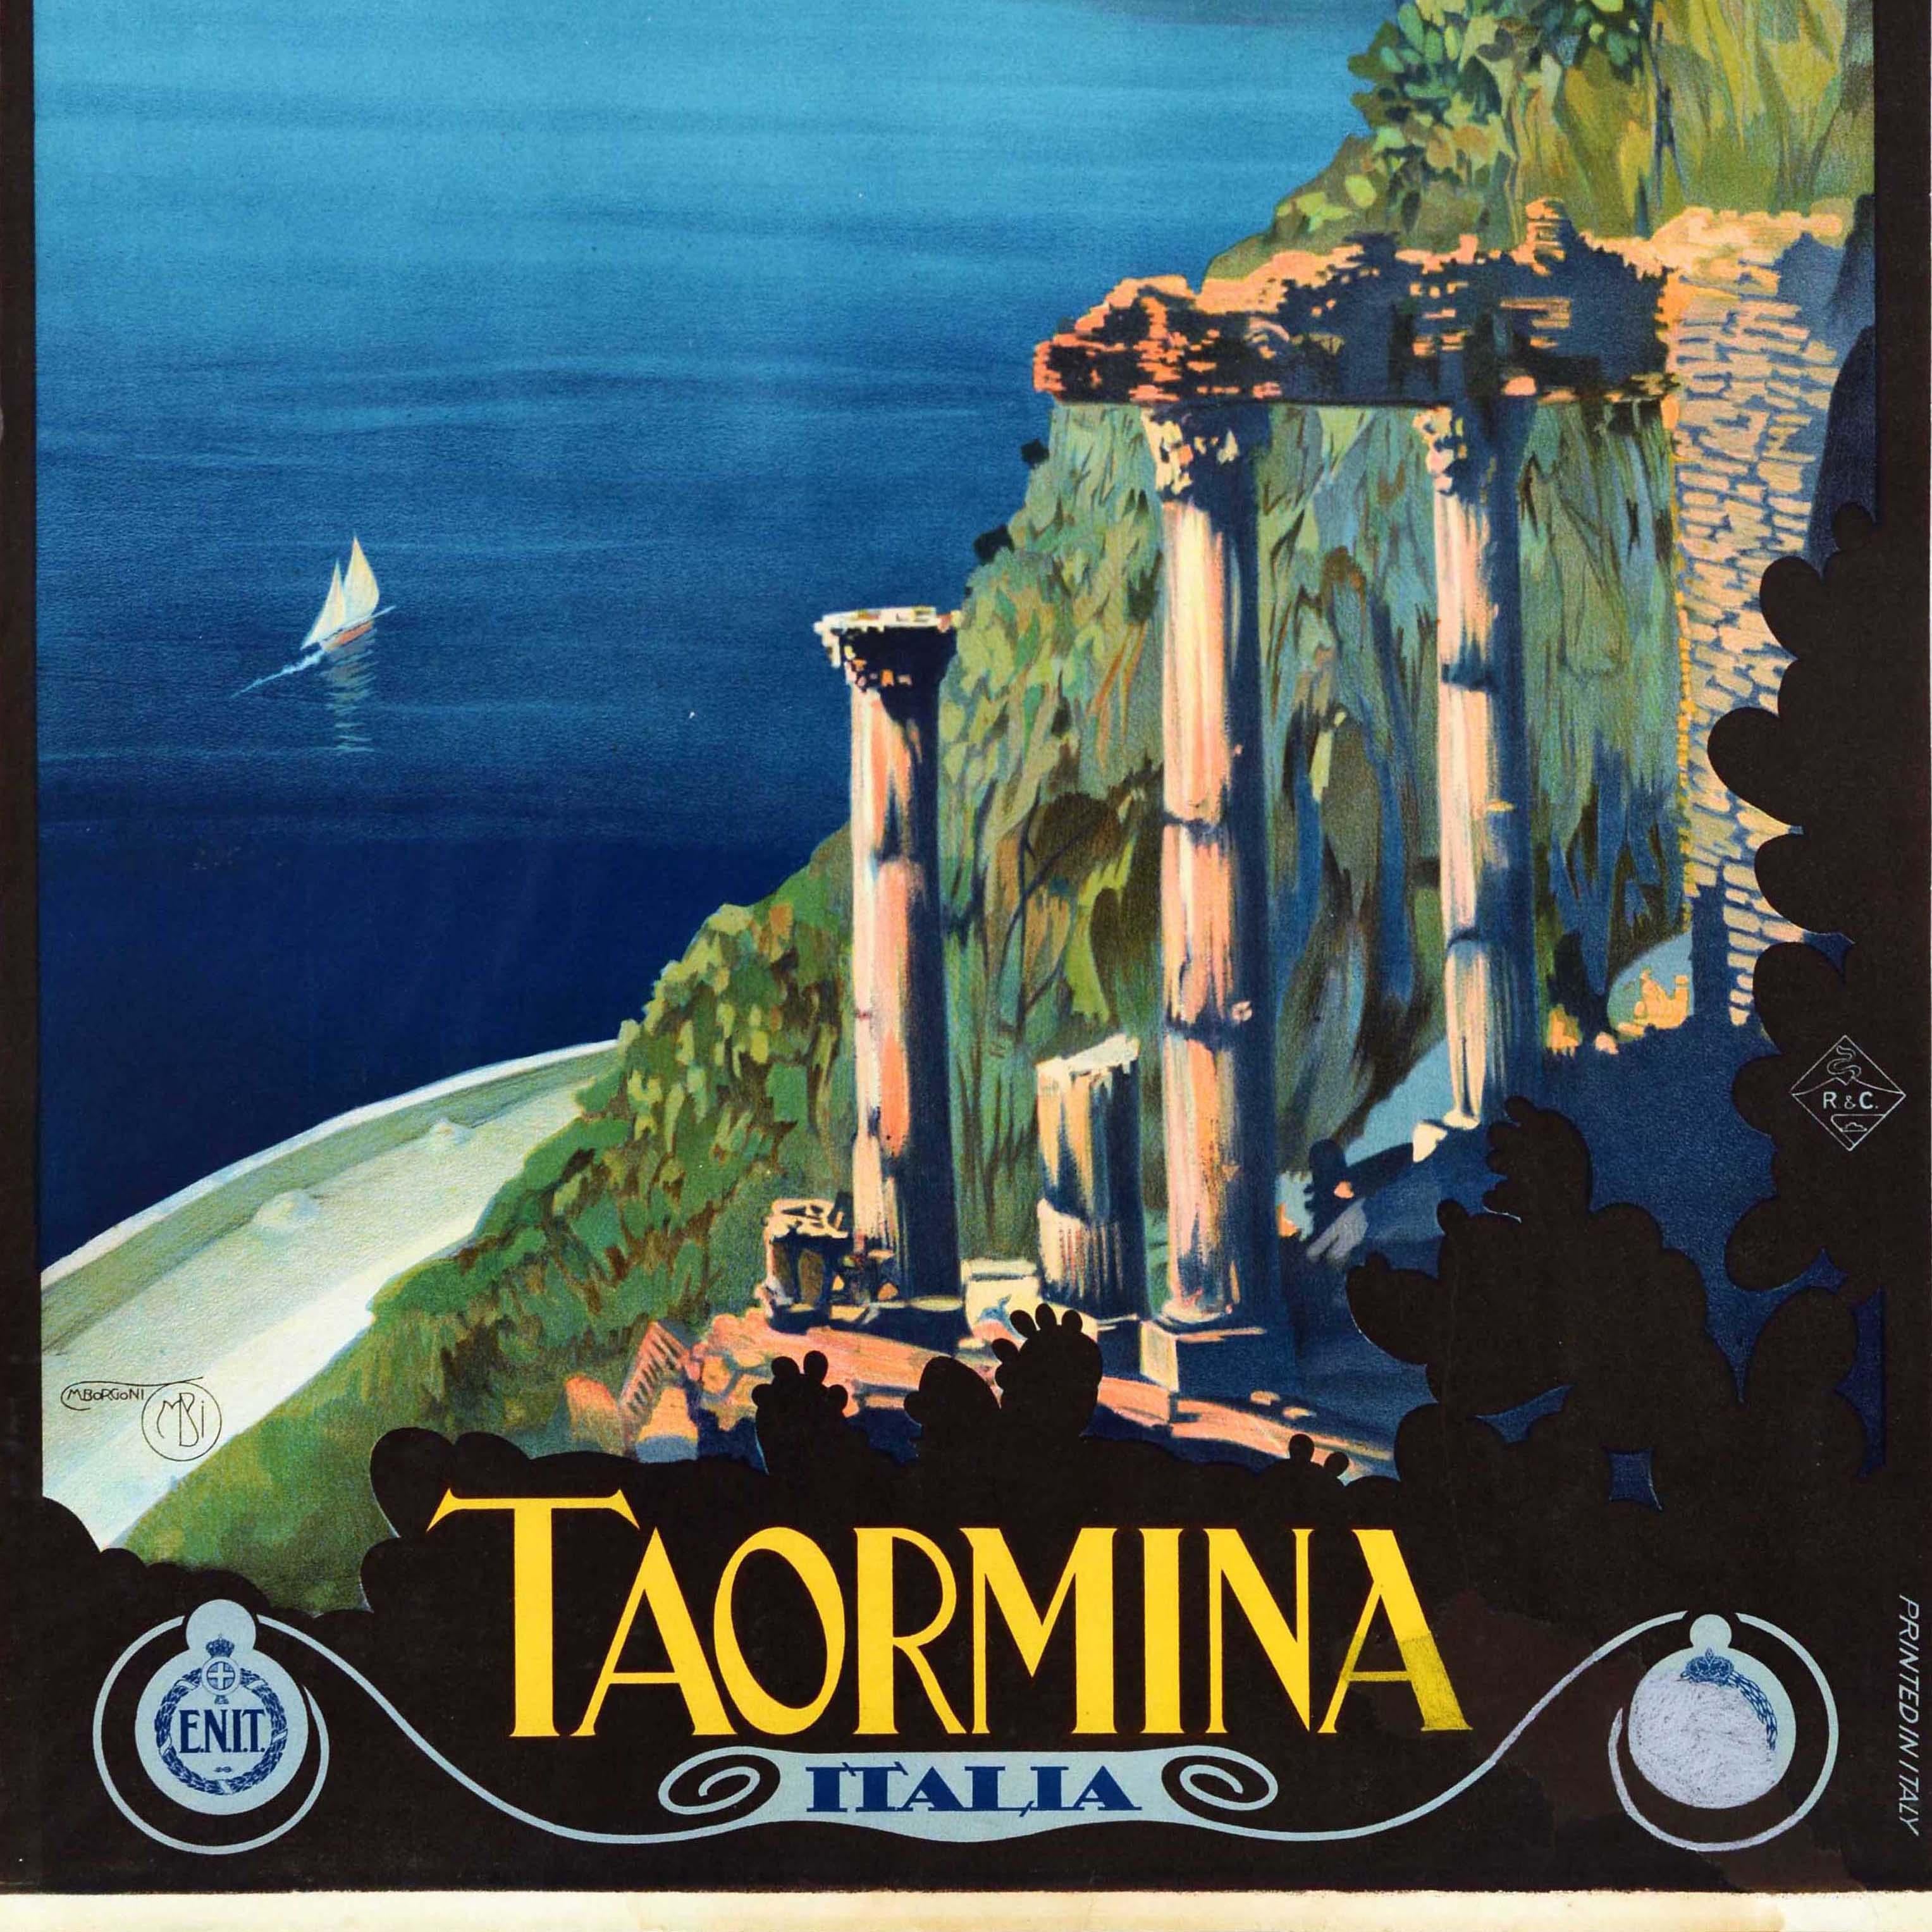 Italian Original Vintage Travel Poster Taormina Sicily ENIT Italy Borgoni Mount Etna Art For Sale